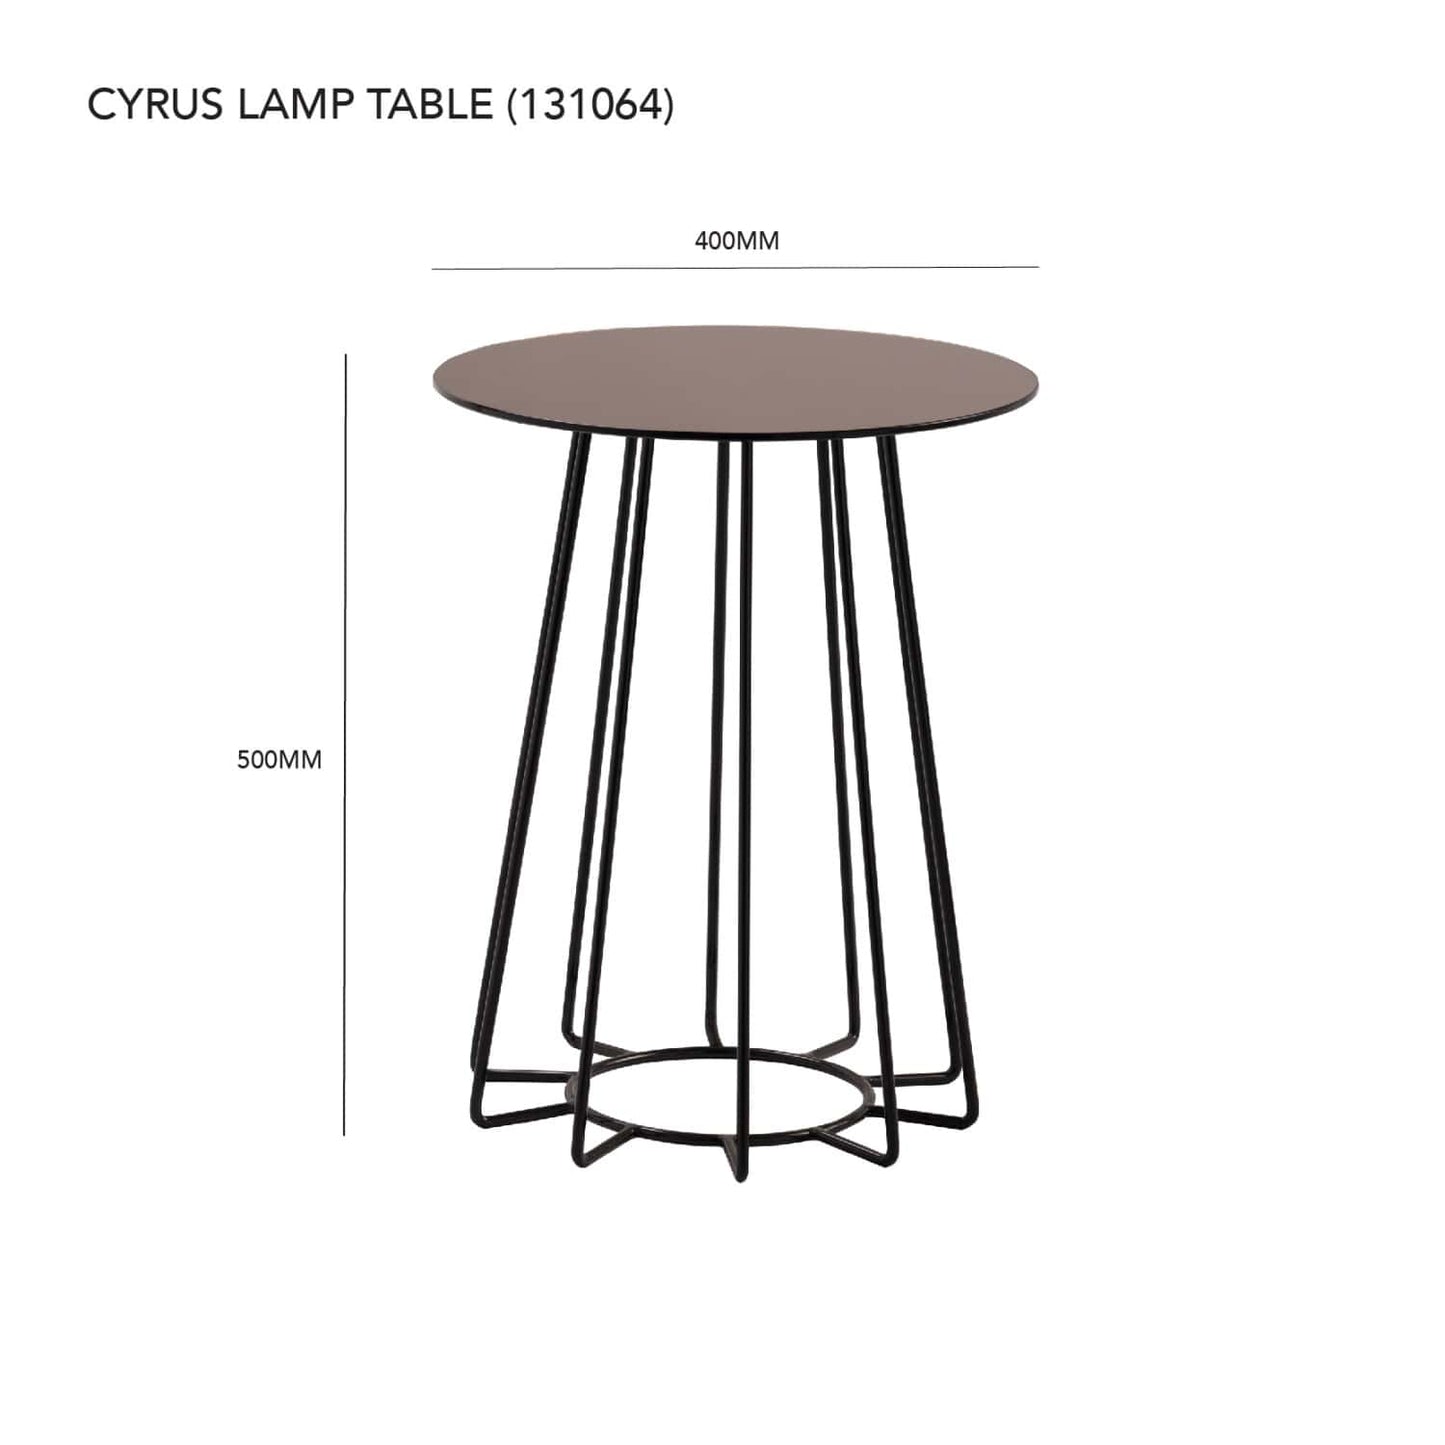 CYRUS LAMP TABLE